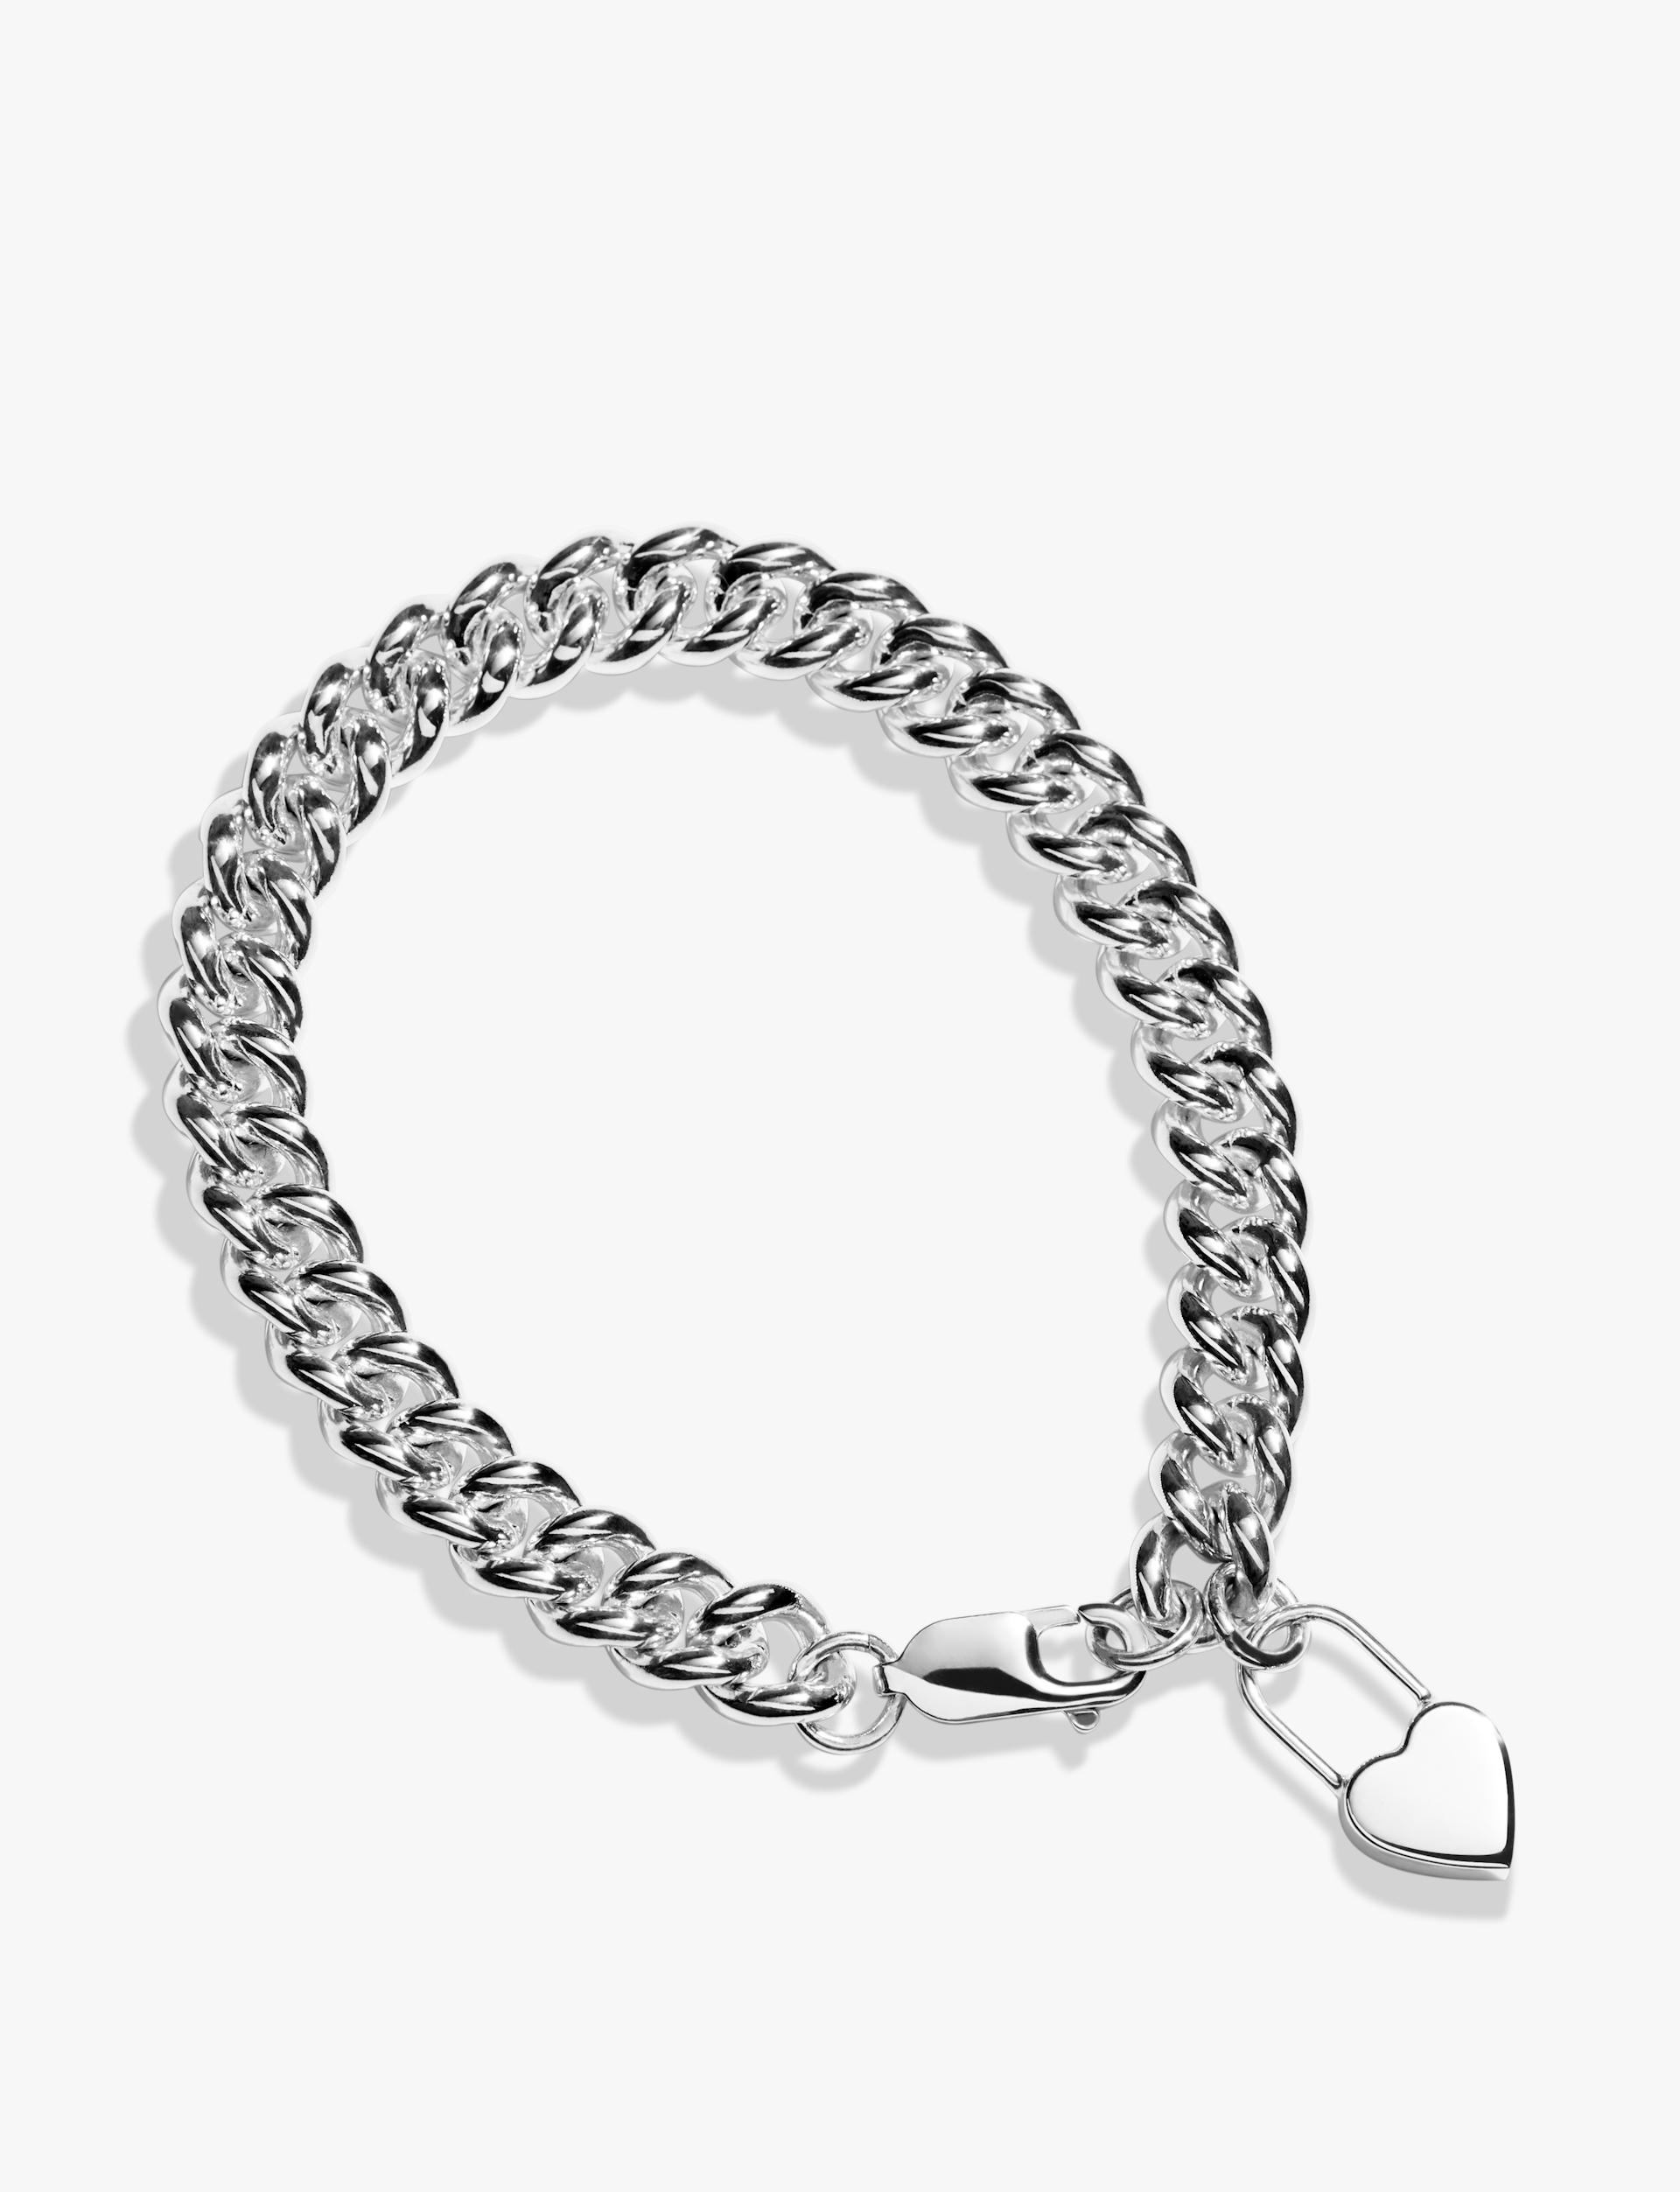 Sterling Silver Chain Bracelet - Links of Power